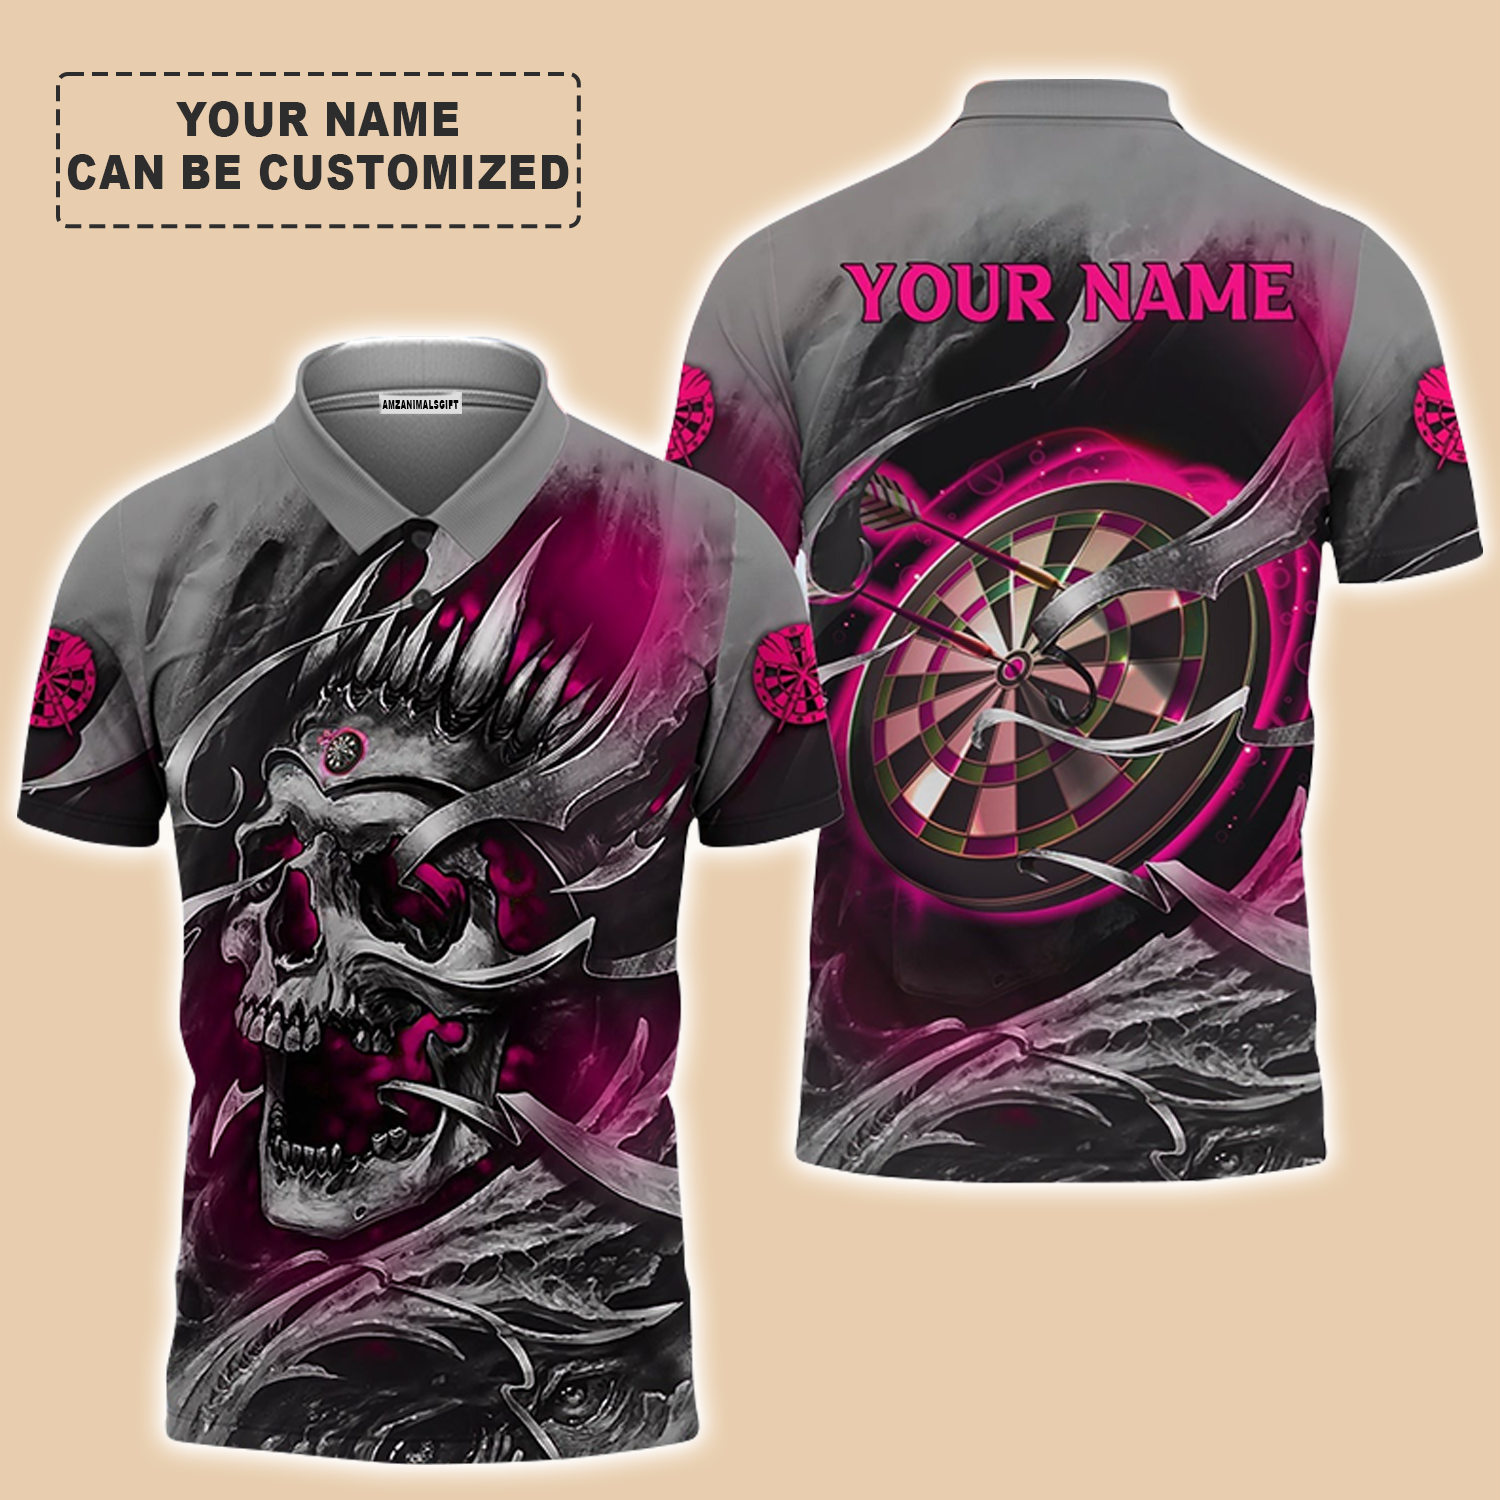 Customized Name Darts Men Polo Shirt, Pink Skull Dartboard Personalized Skull And Darts Polo Shirt - Gift For Darts Players Uniforms, Darts Lovers